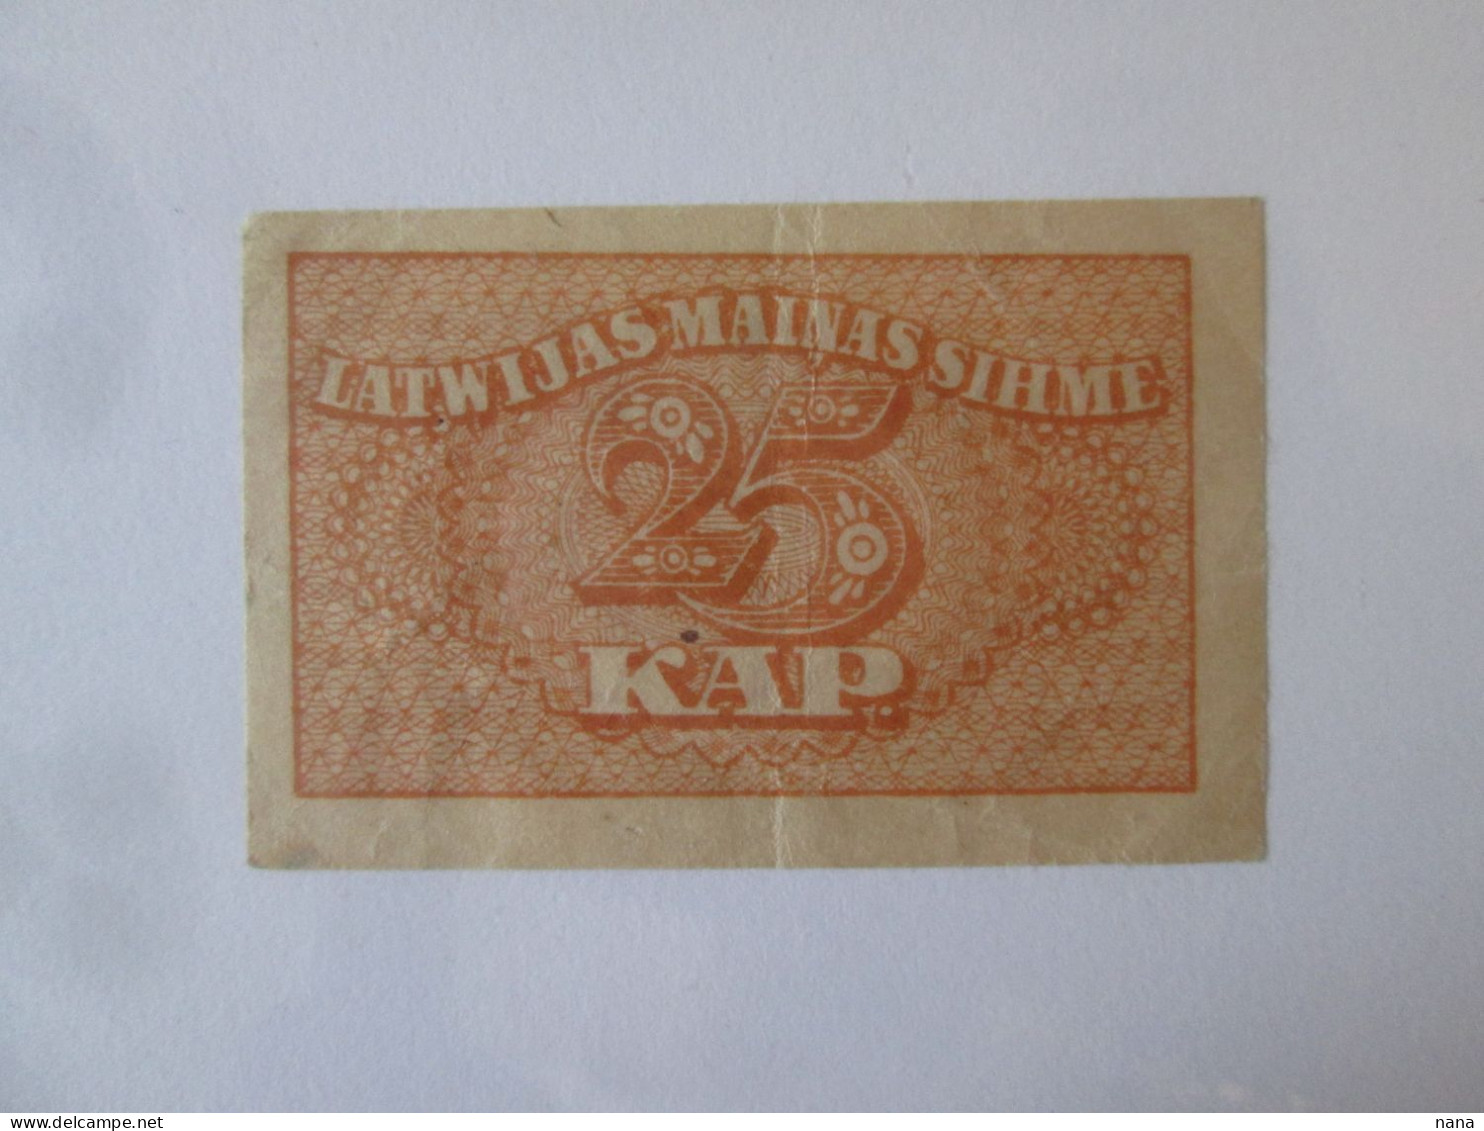 Rare! Lettonie/Latvia 25 Kapeiku 1920 Banknote See Pictures - Latvia